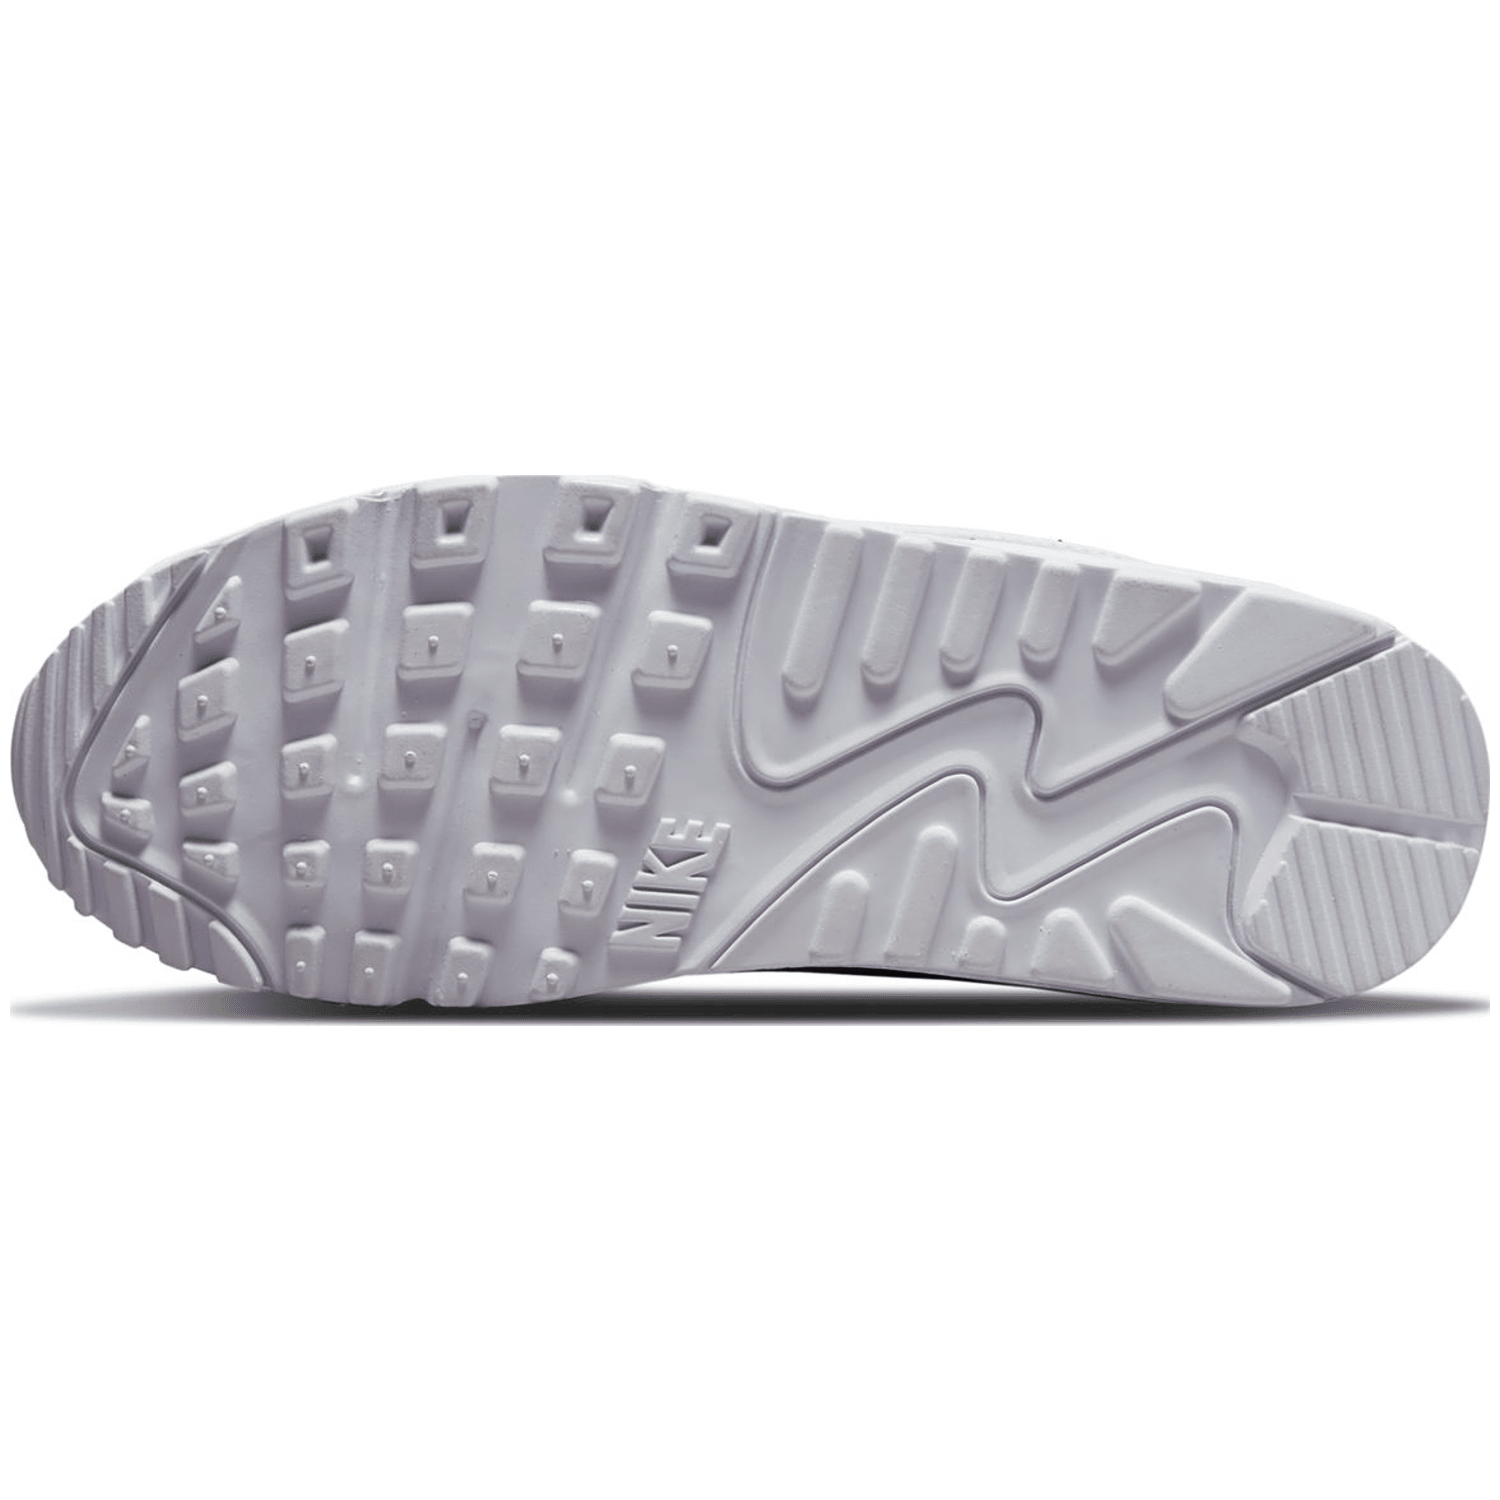 Nike Air Max 90s Damen Freizeit-Schuh